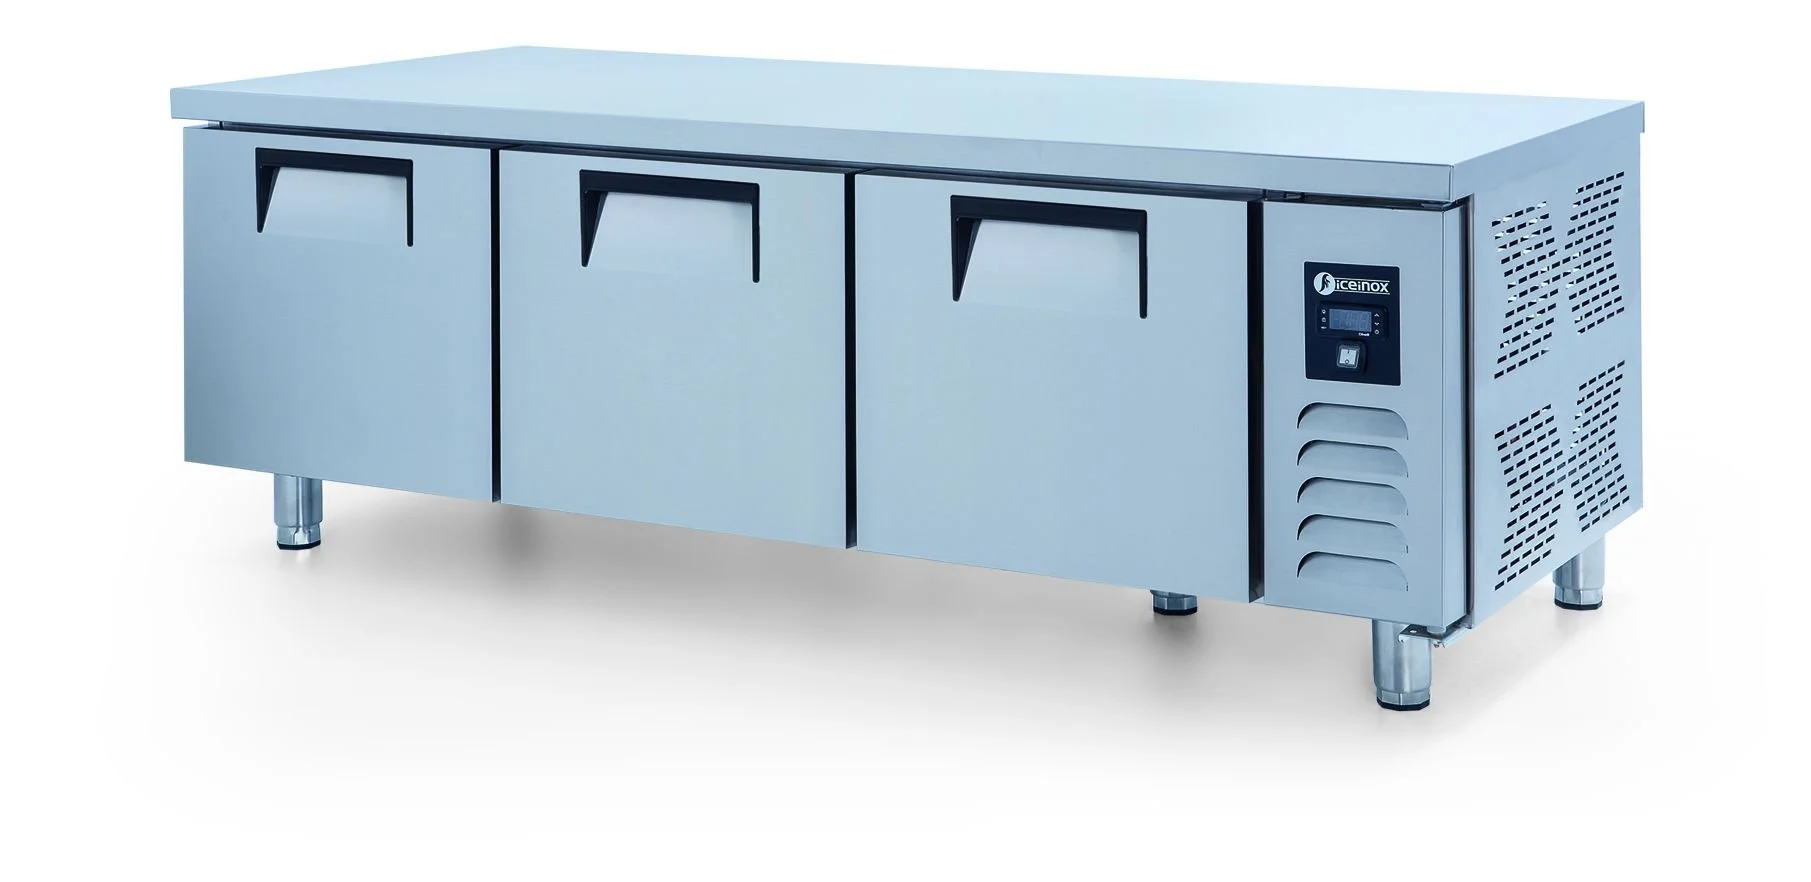 Iceinox CTN 440 Kısa Model Tezgah Tip Buzdolabı, 3 Kapılı, 440 L